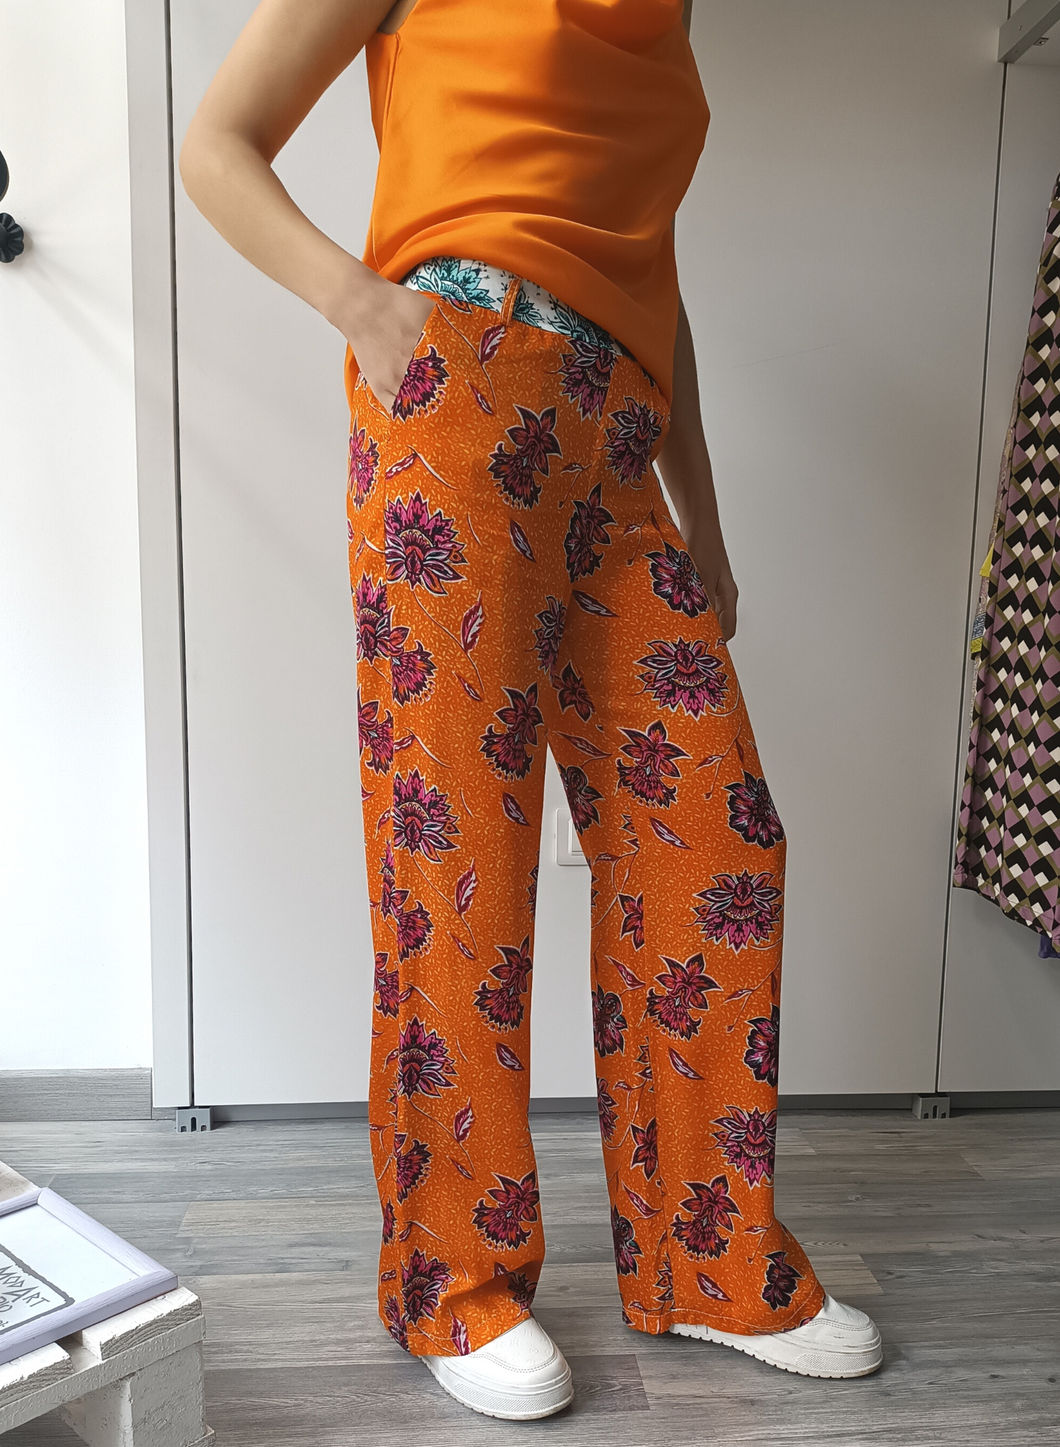 Pantaloni in fantasia floreale su fondo arancio